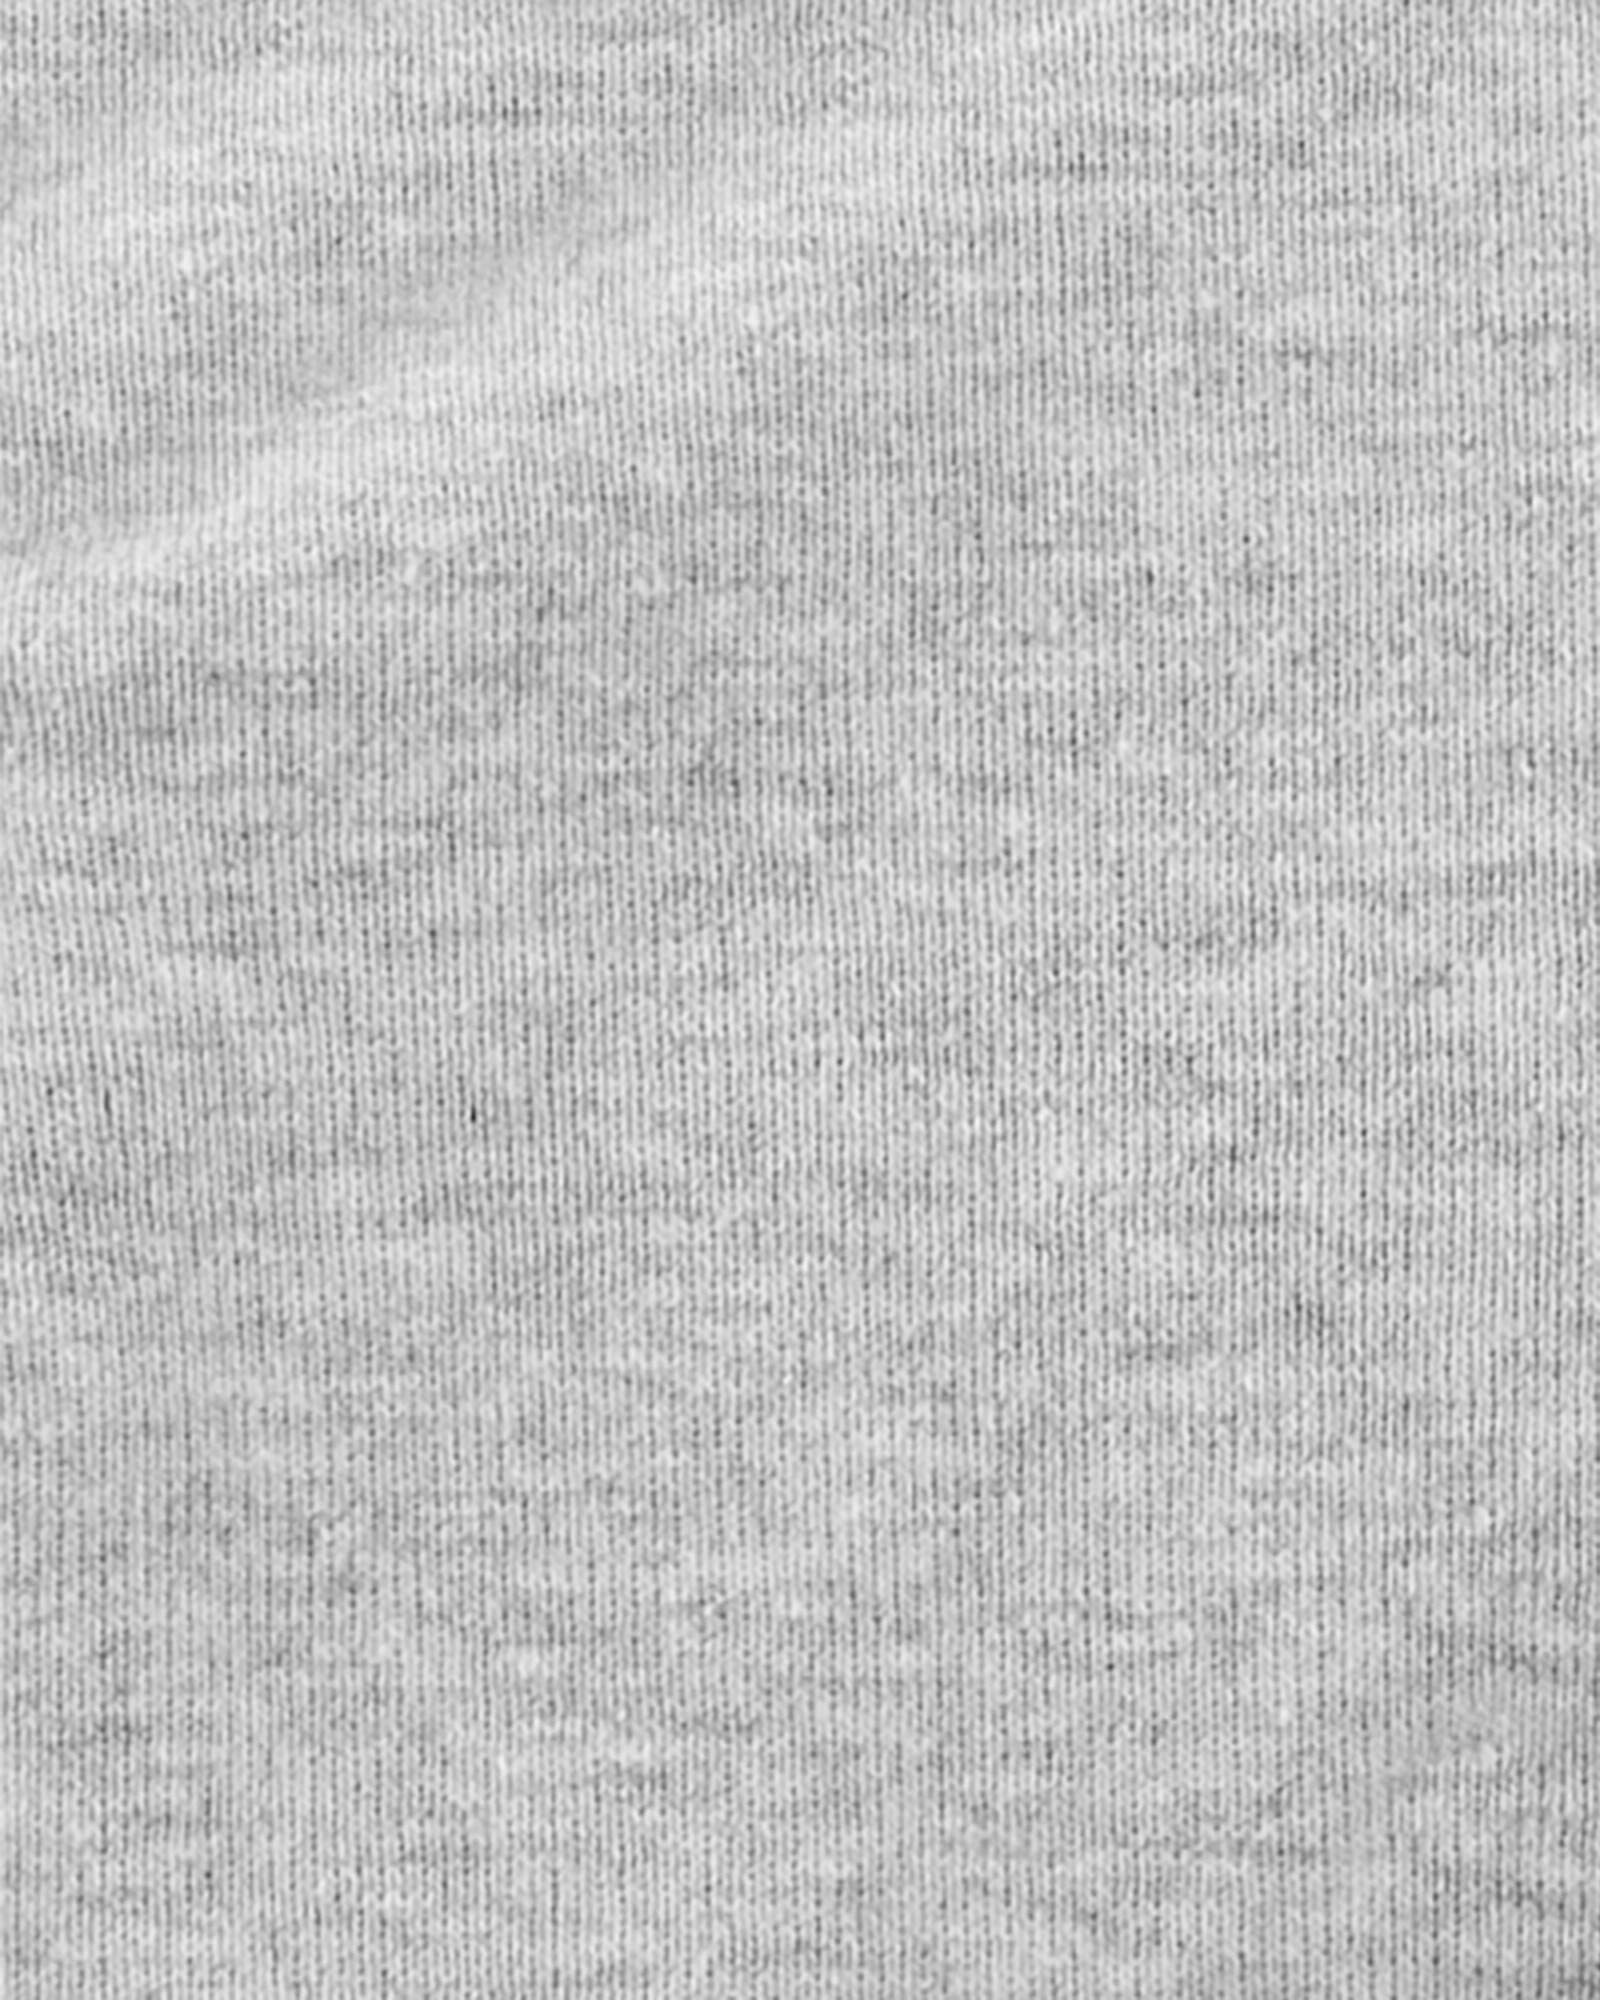 Pack cuatro batitas de algodón manga larga con broches laterales . Talles PRE-3M Sin color